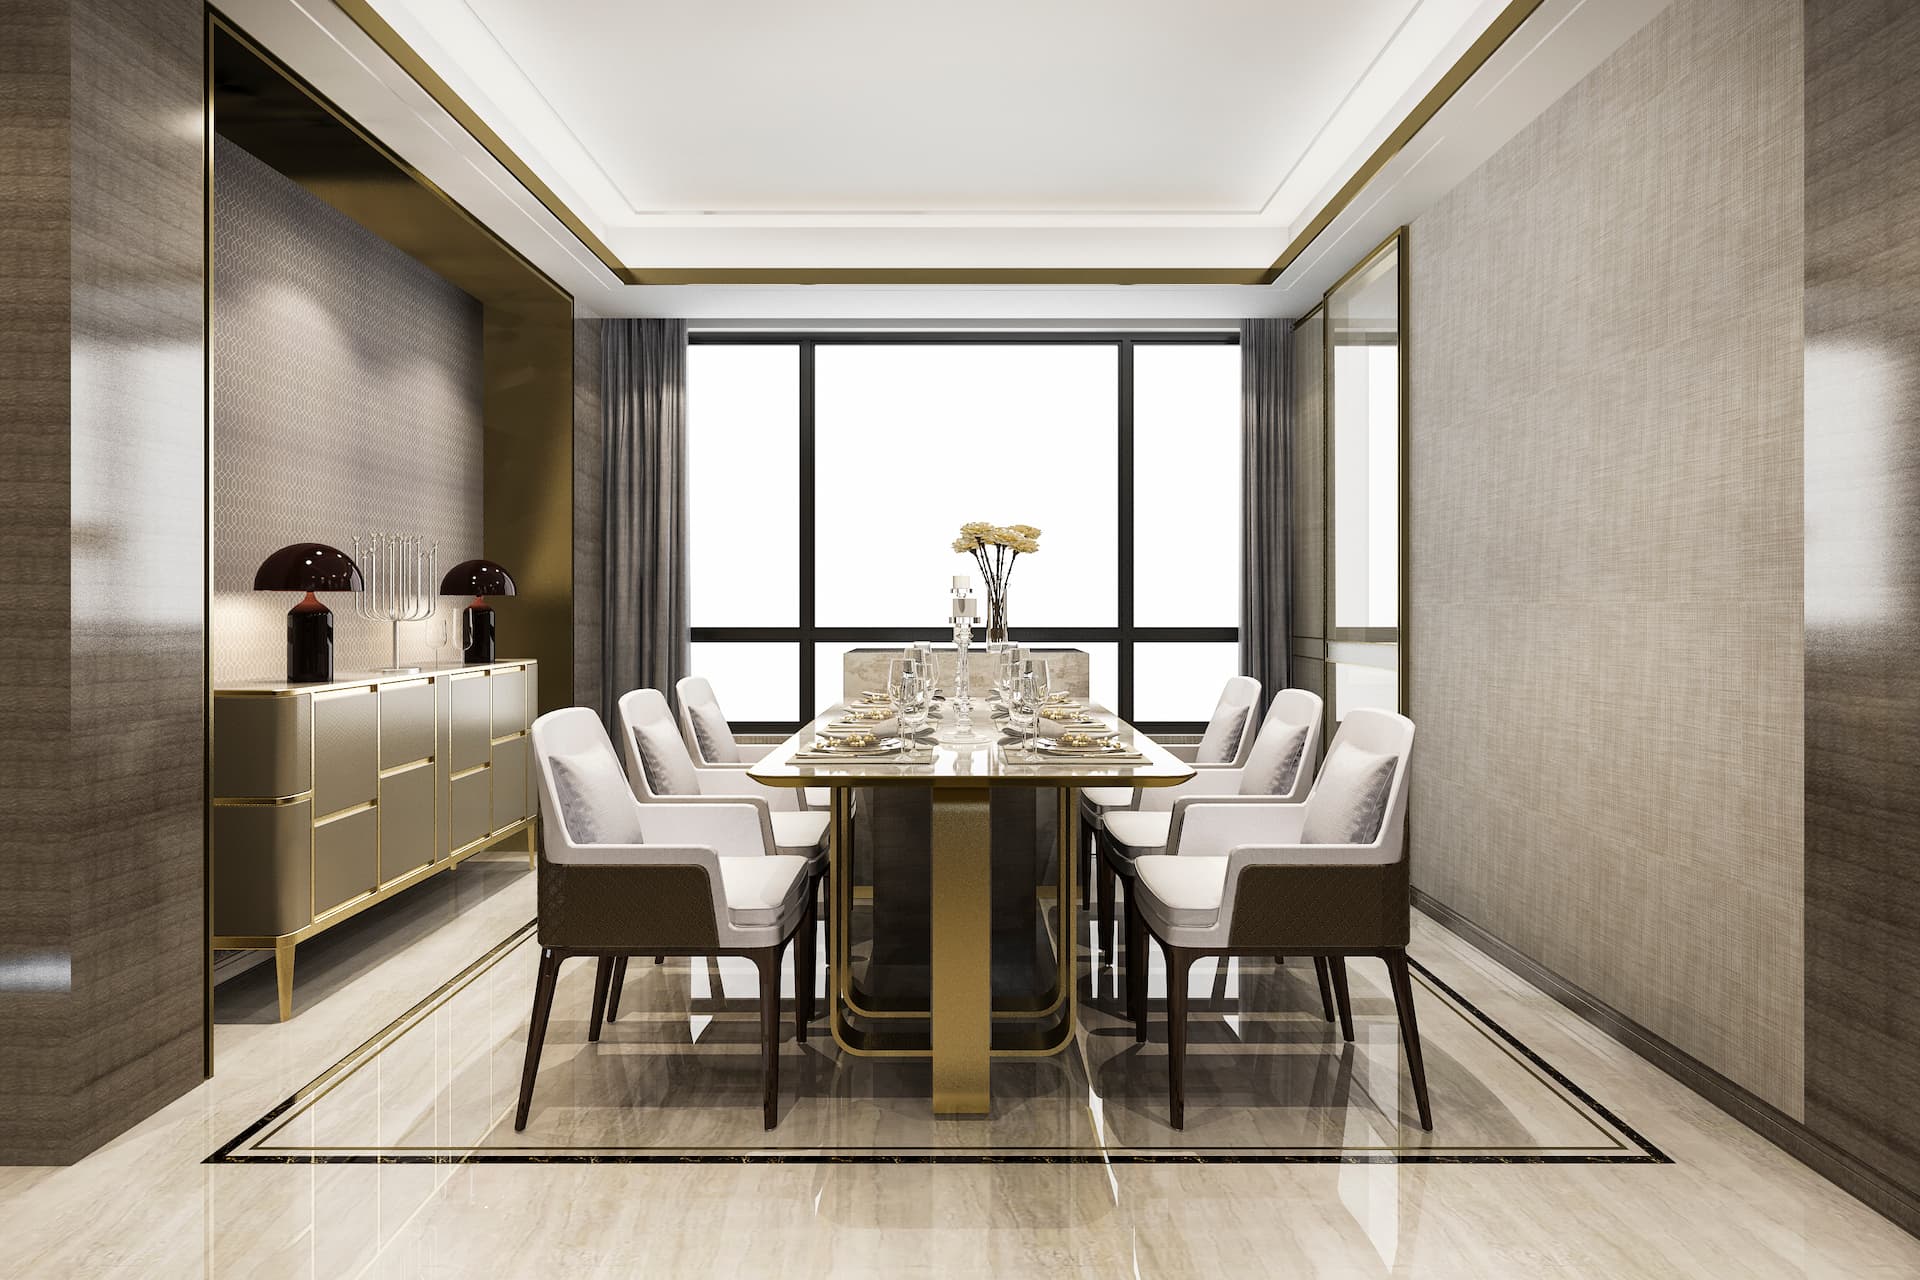 salle-manger-rendu-3d-dans-salle-manger-luxe-moderne (1)